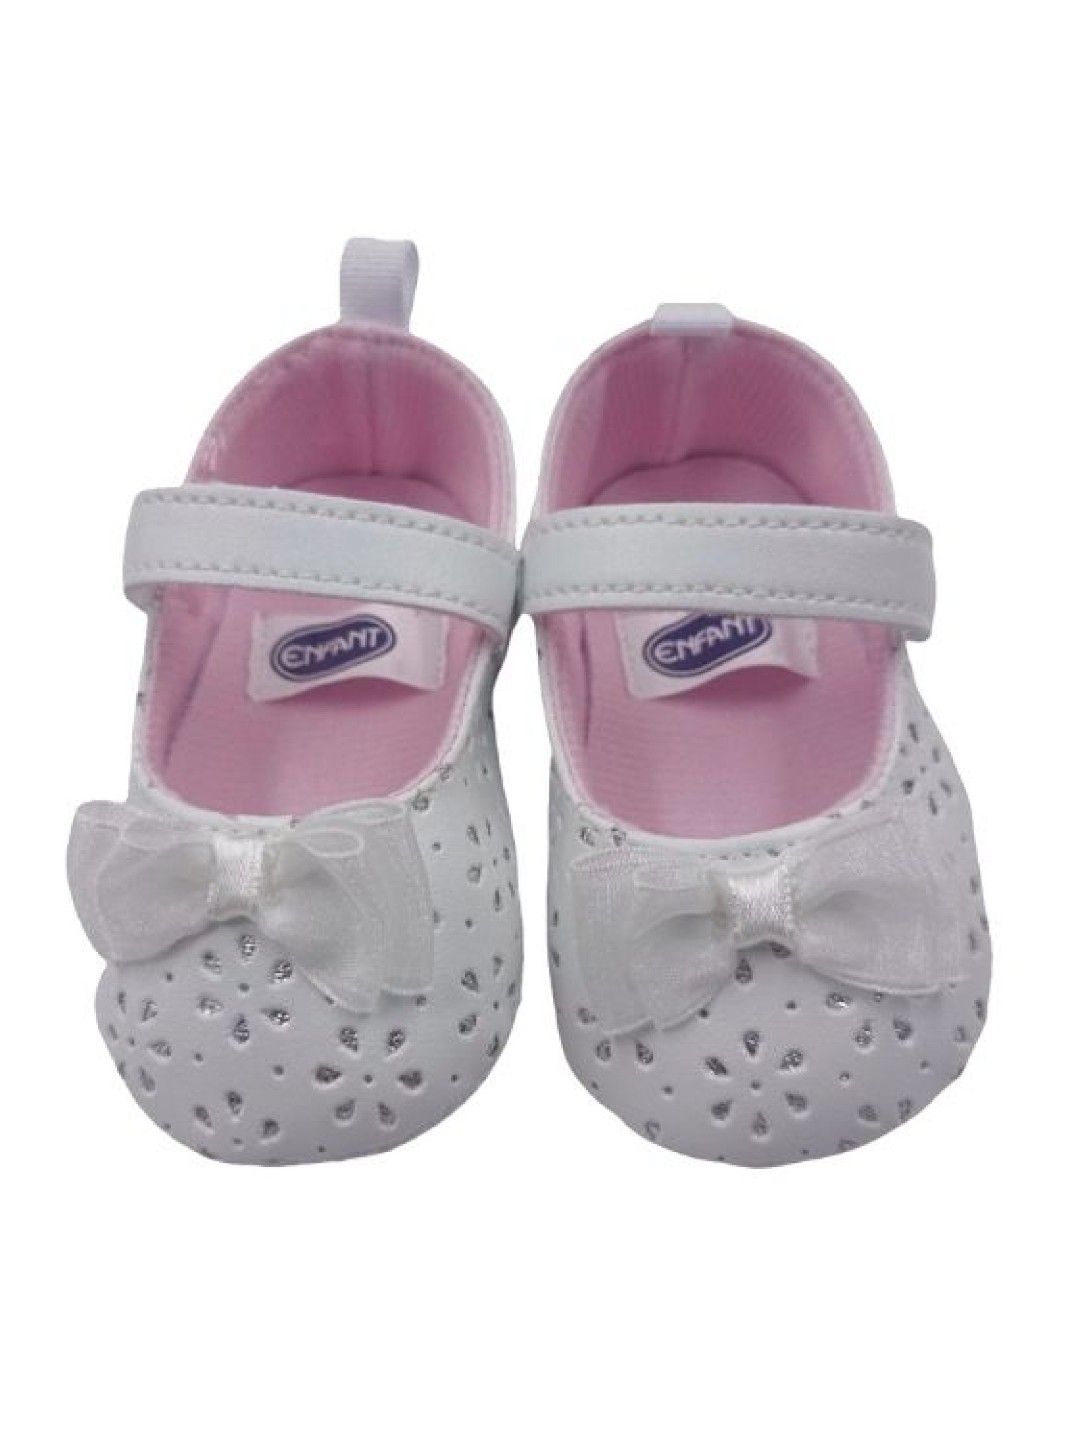 Enfant Baby Shoes